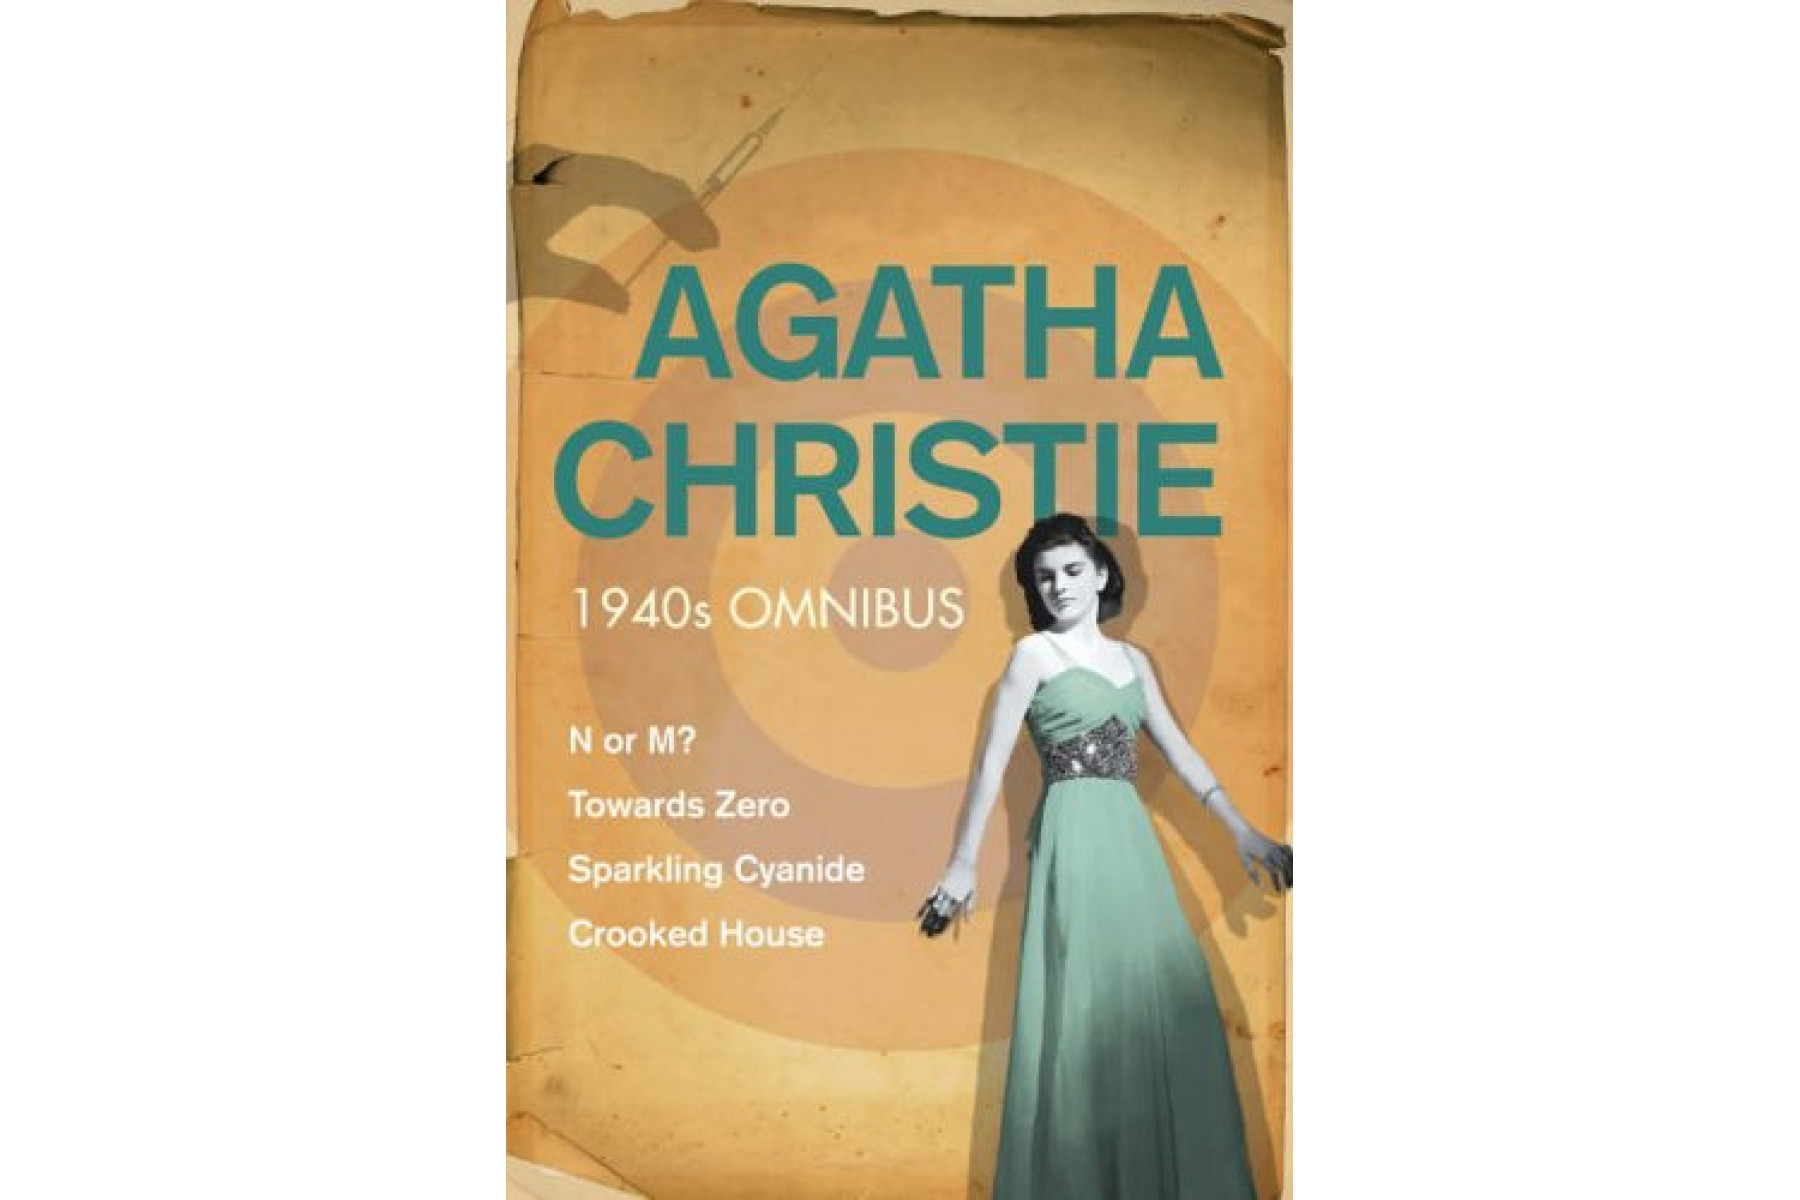 1940s Omnibus (The Agatha Christie Years)